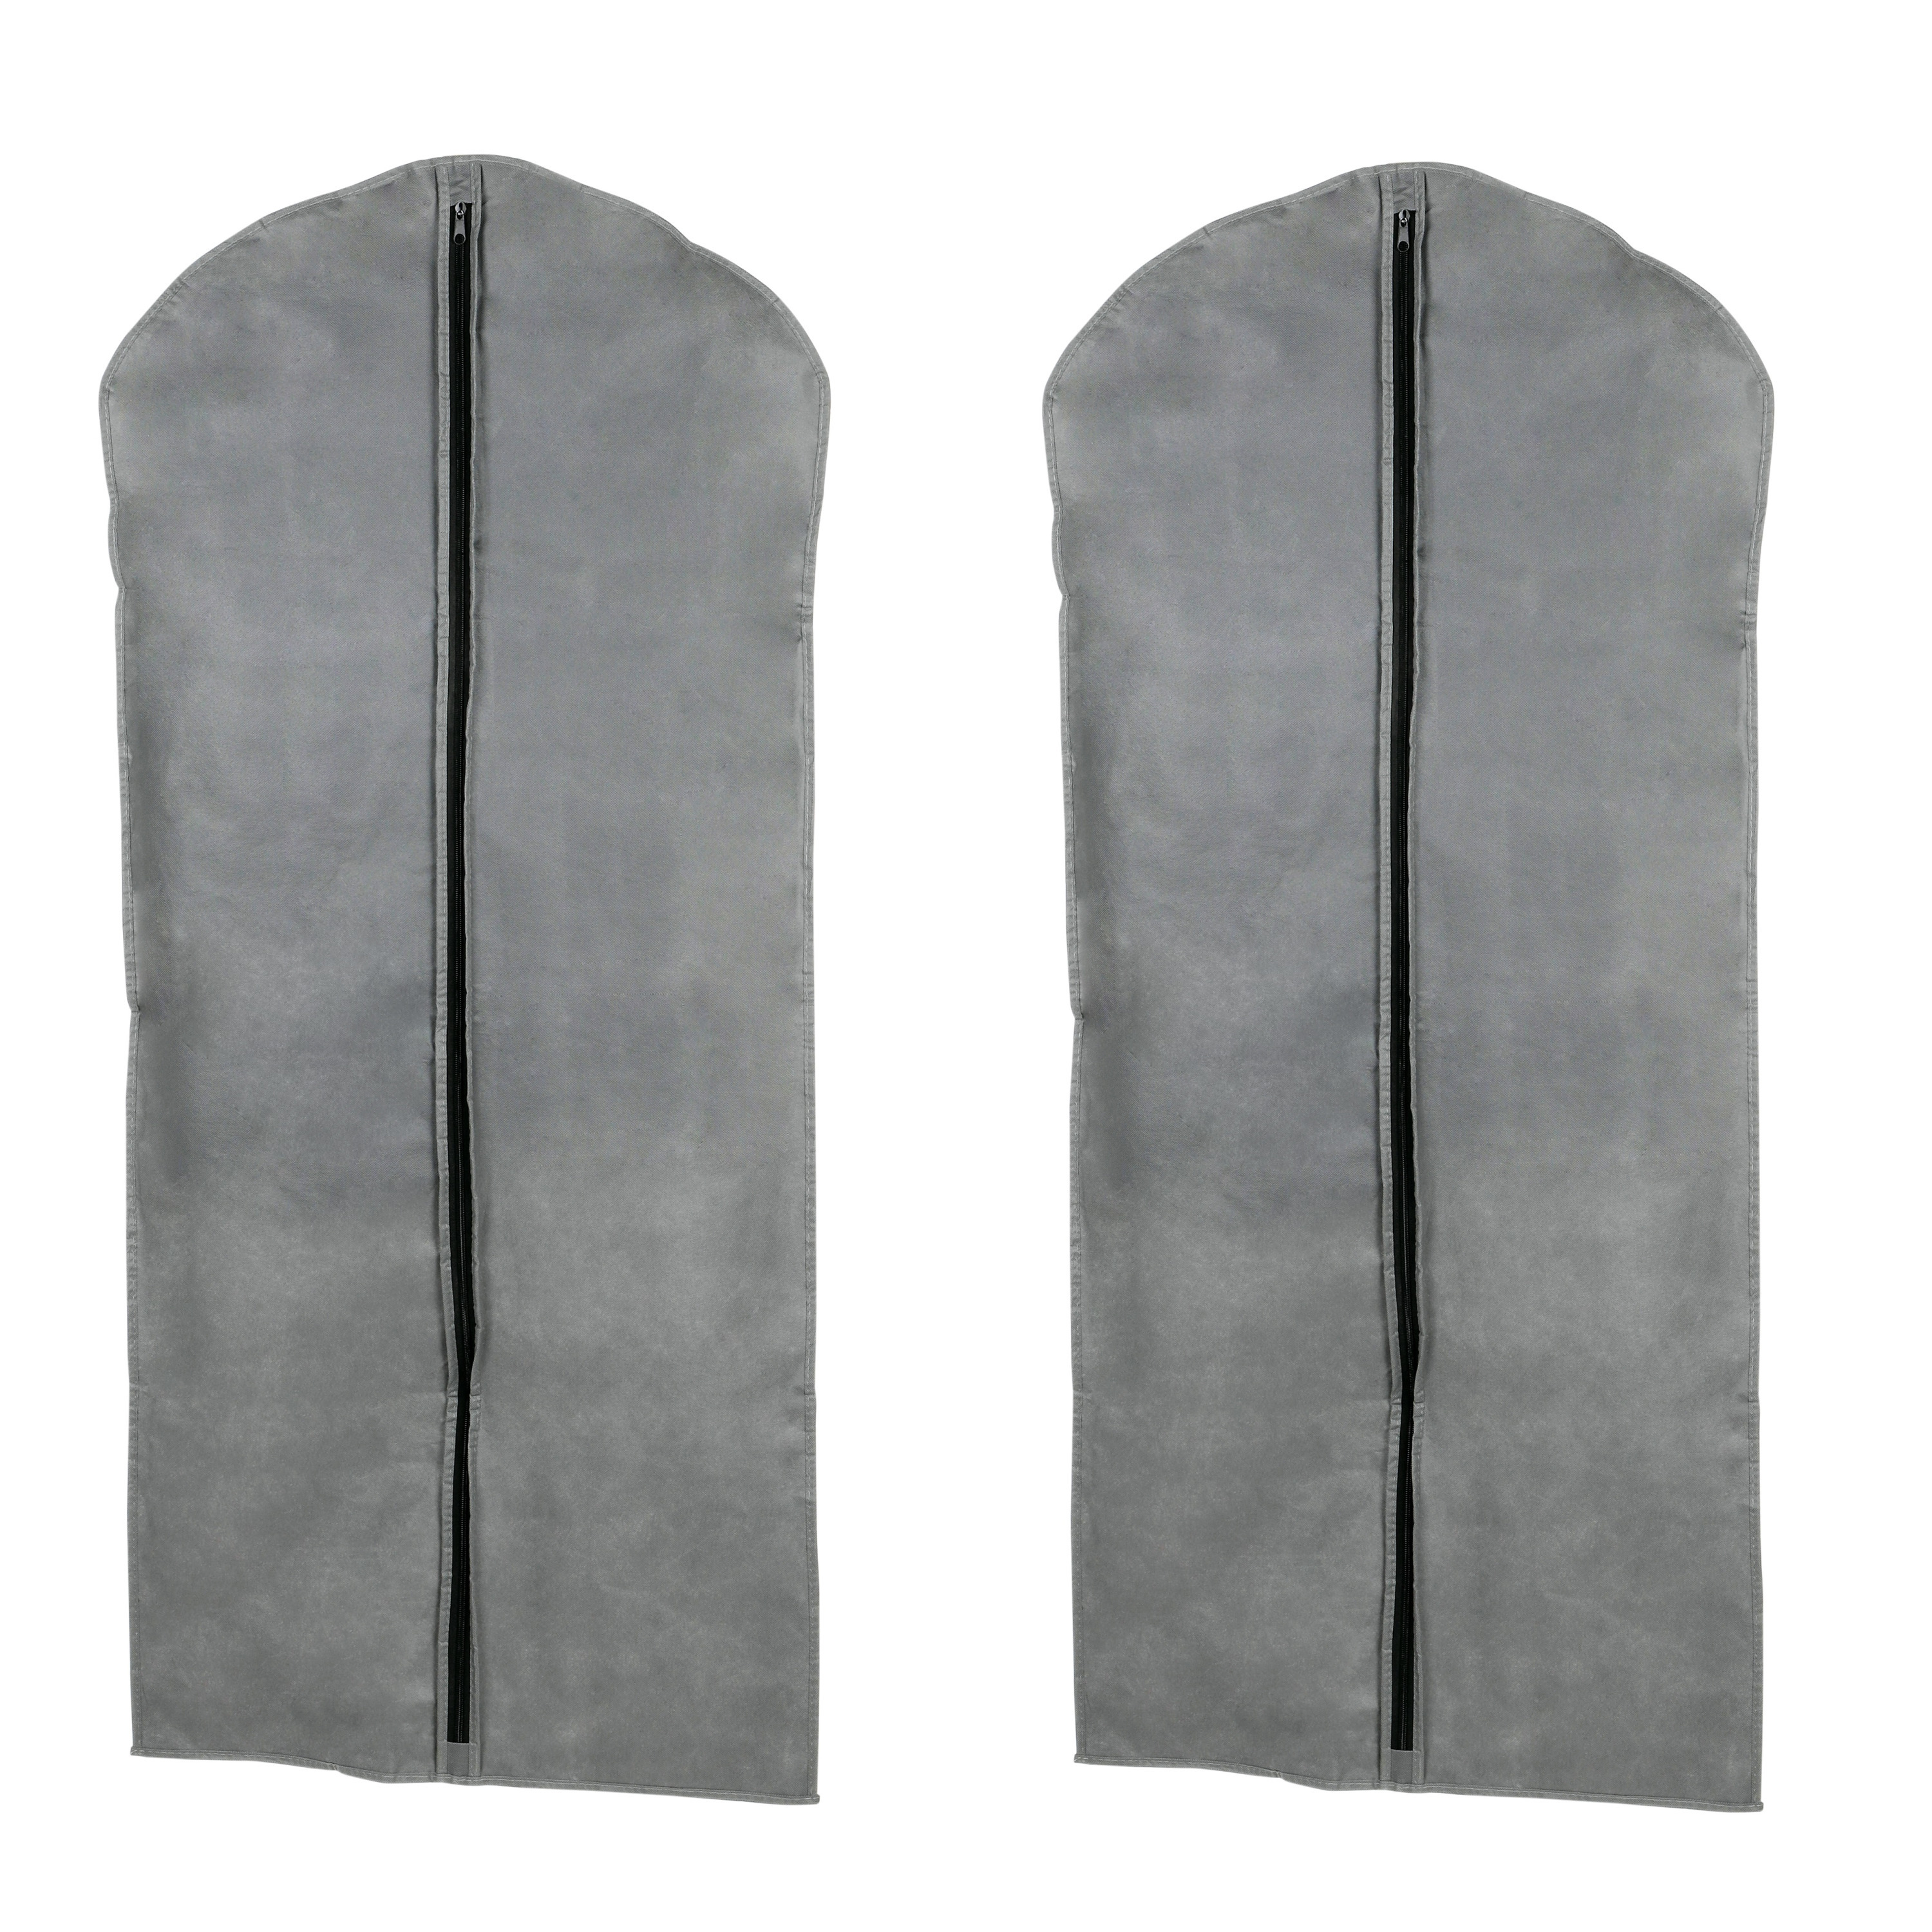 Set van 2x stuks grijze kledinghoes 60 x 137 cm